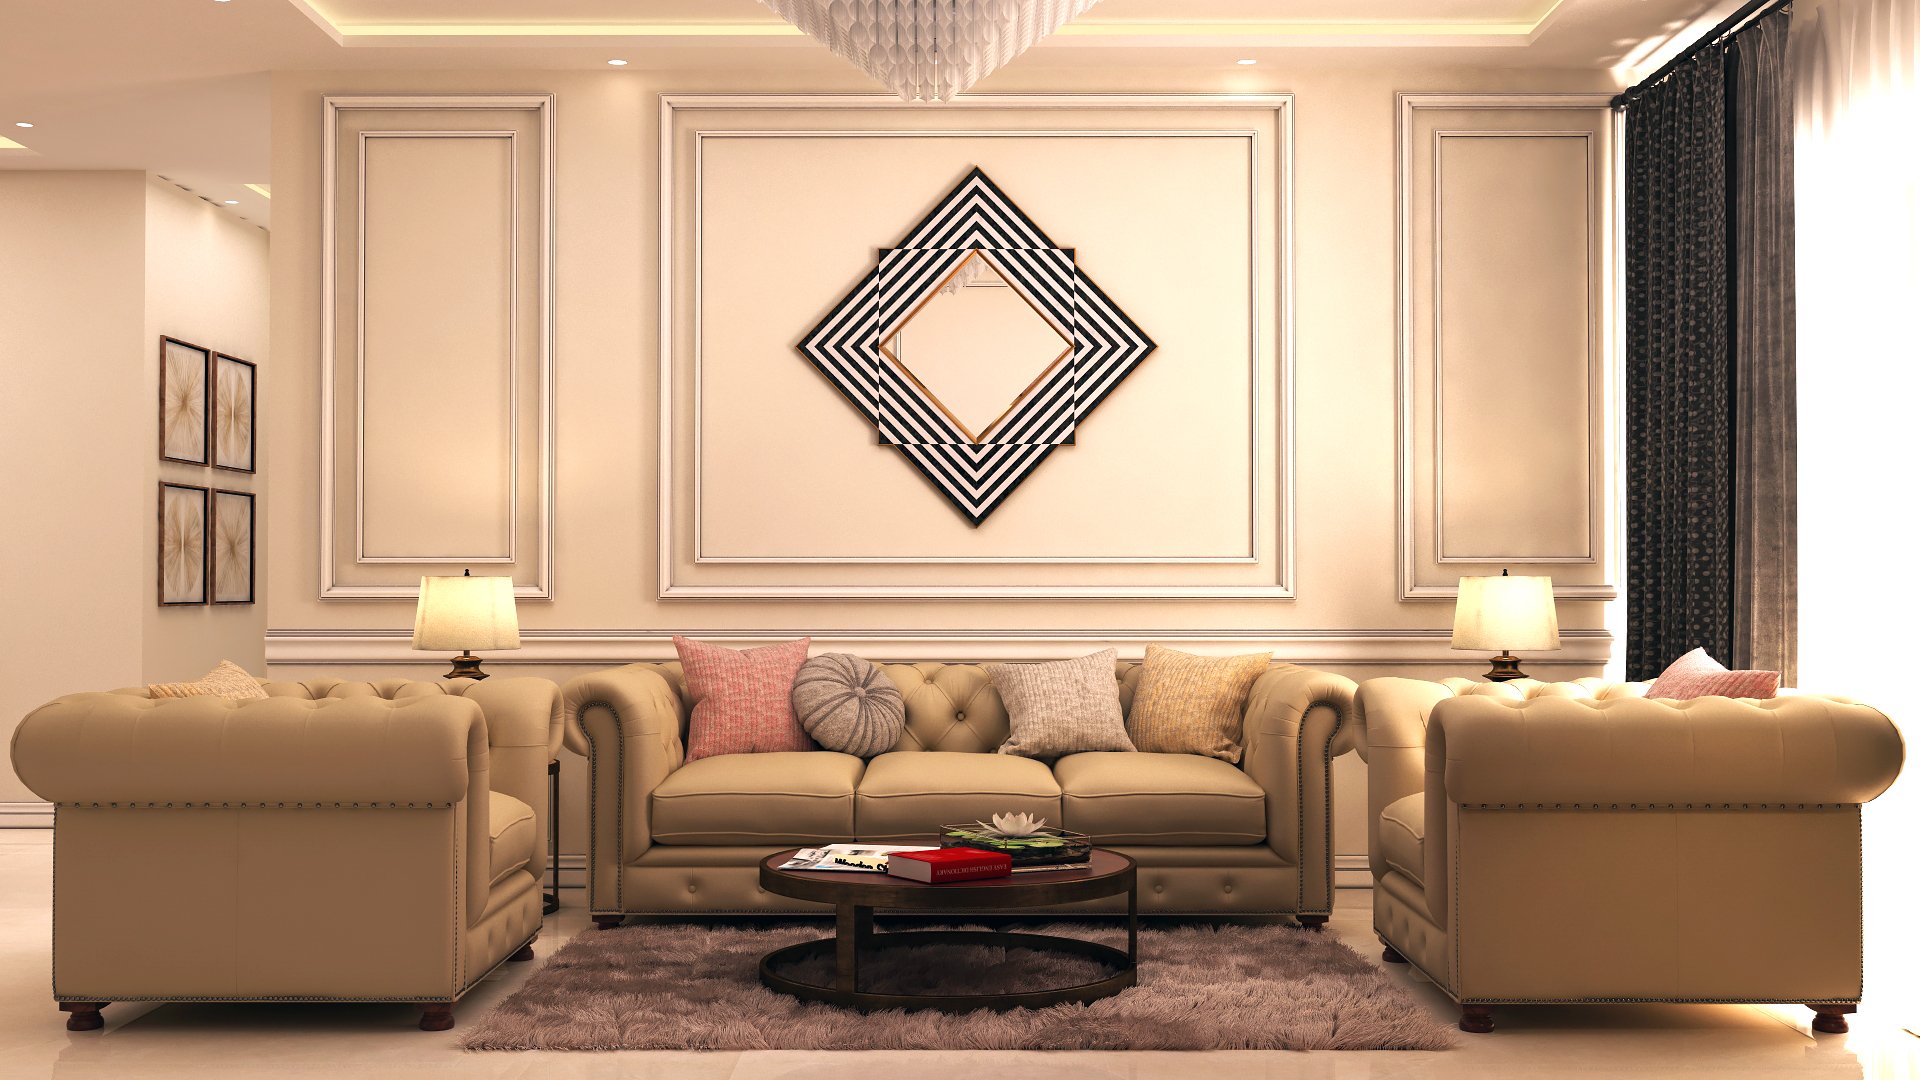 Living Room Design 100+ Modern Living Room Design Ideas 2020